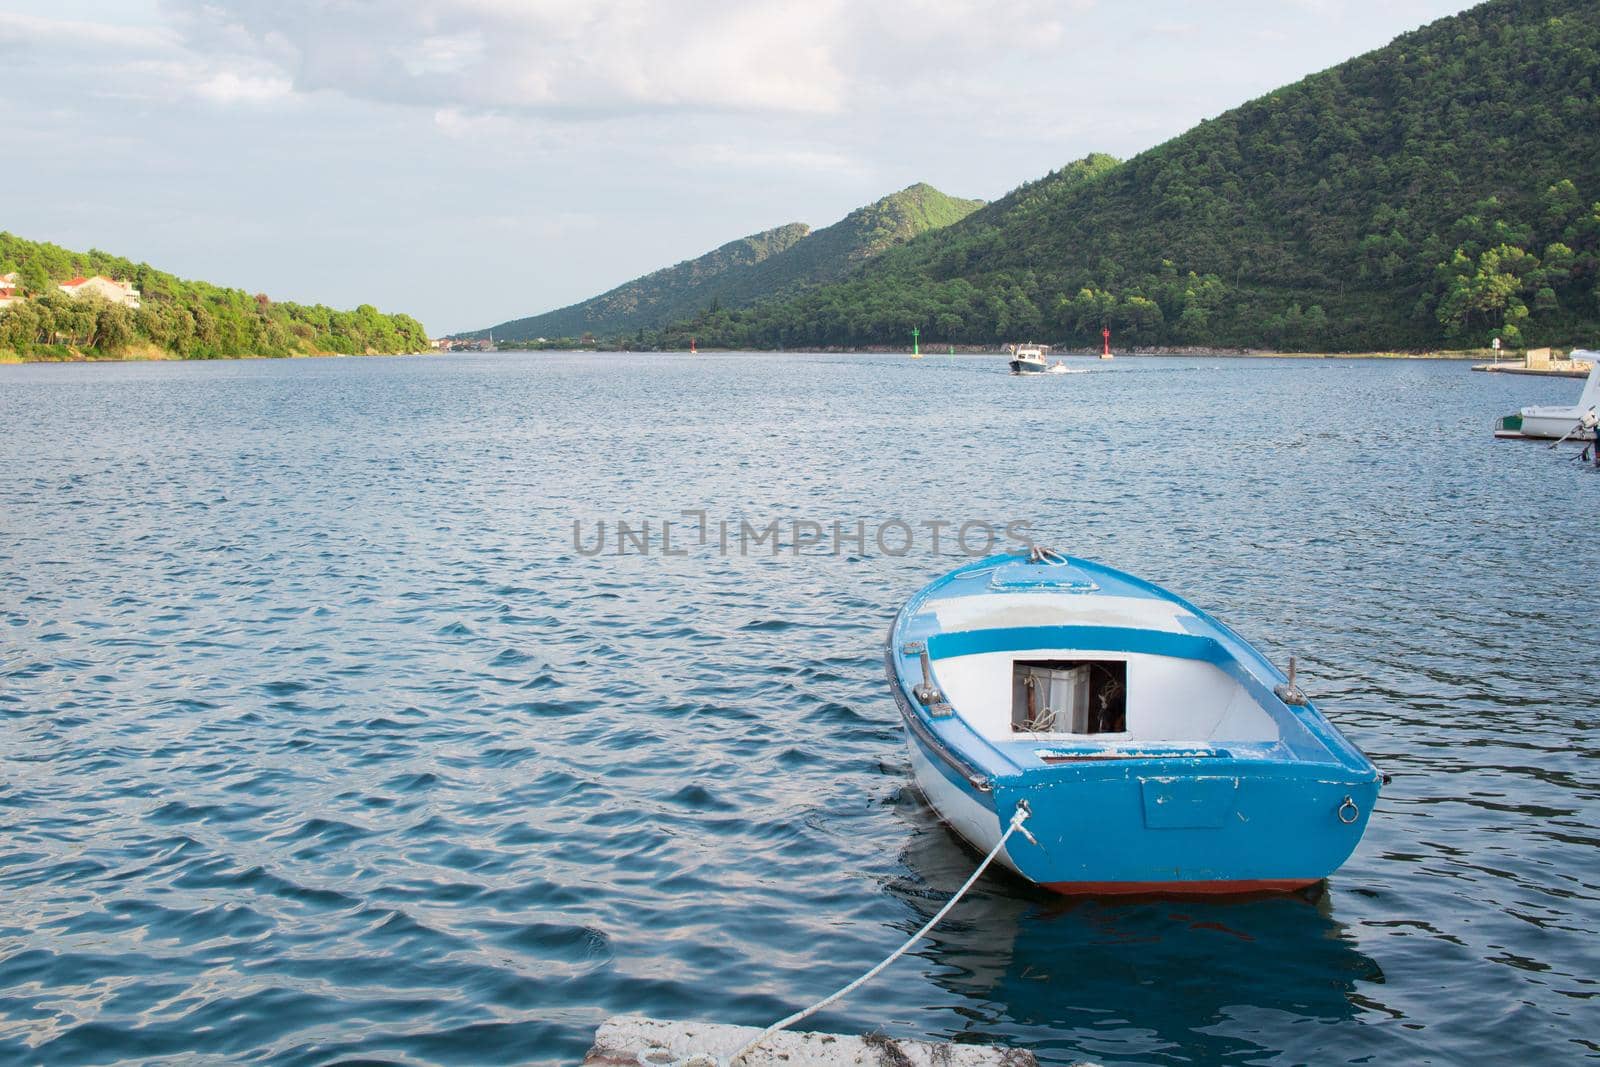 Small fishing boat in Mediterranean bay of Croatia tied to shore by VeraVerano